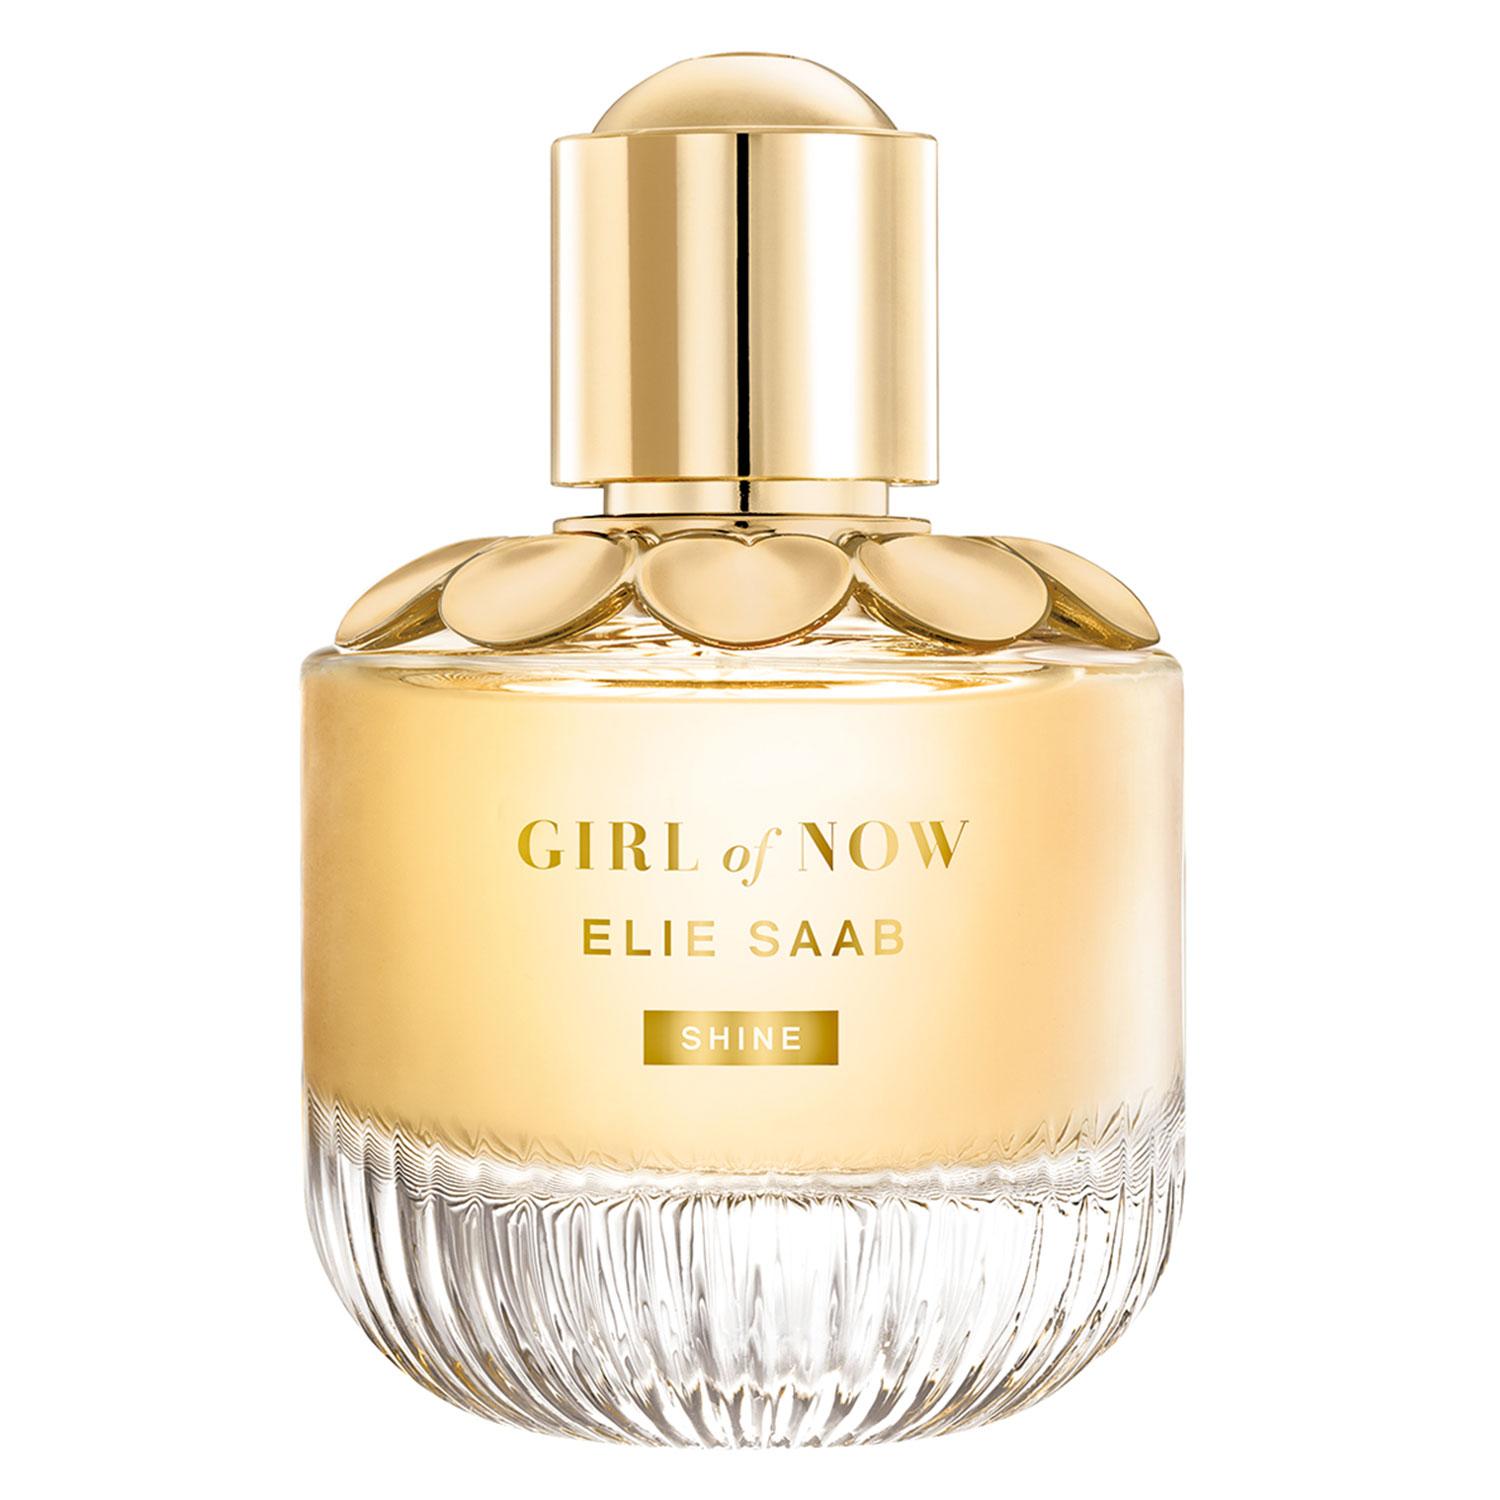 Girl of Now - Shine Eau de Parfum